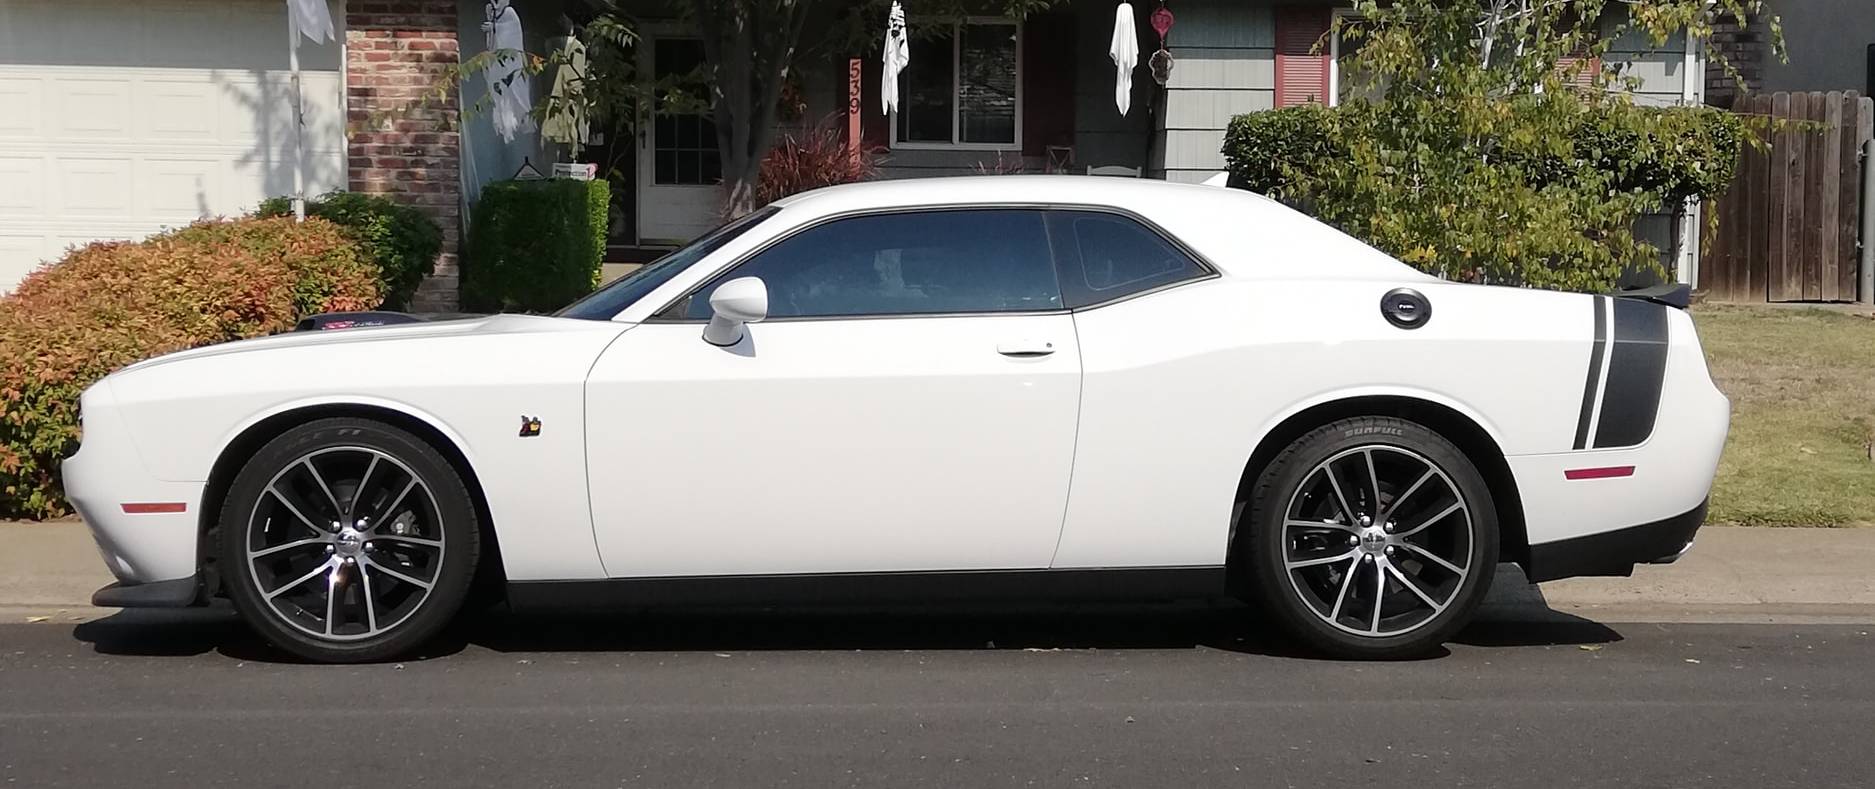 White Car in Sacramento, California | Goodwill Car Donations